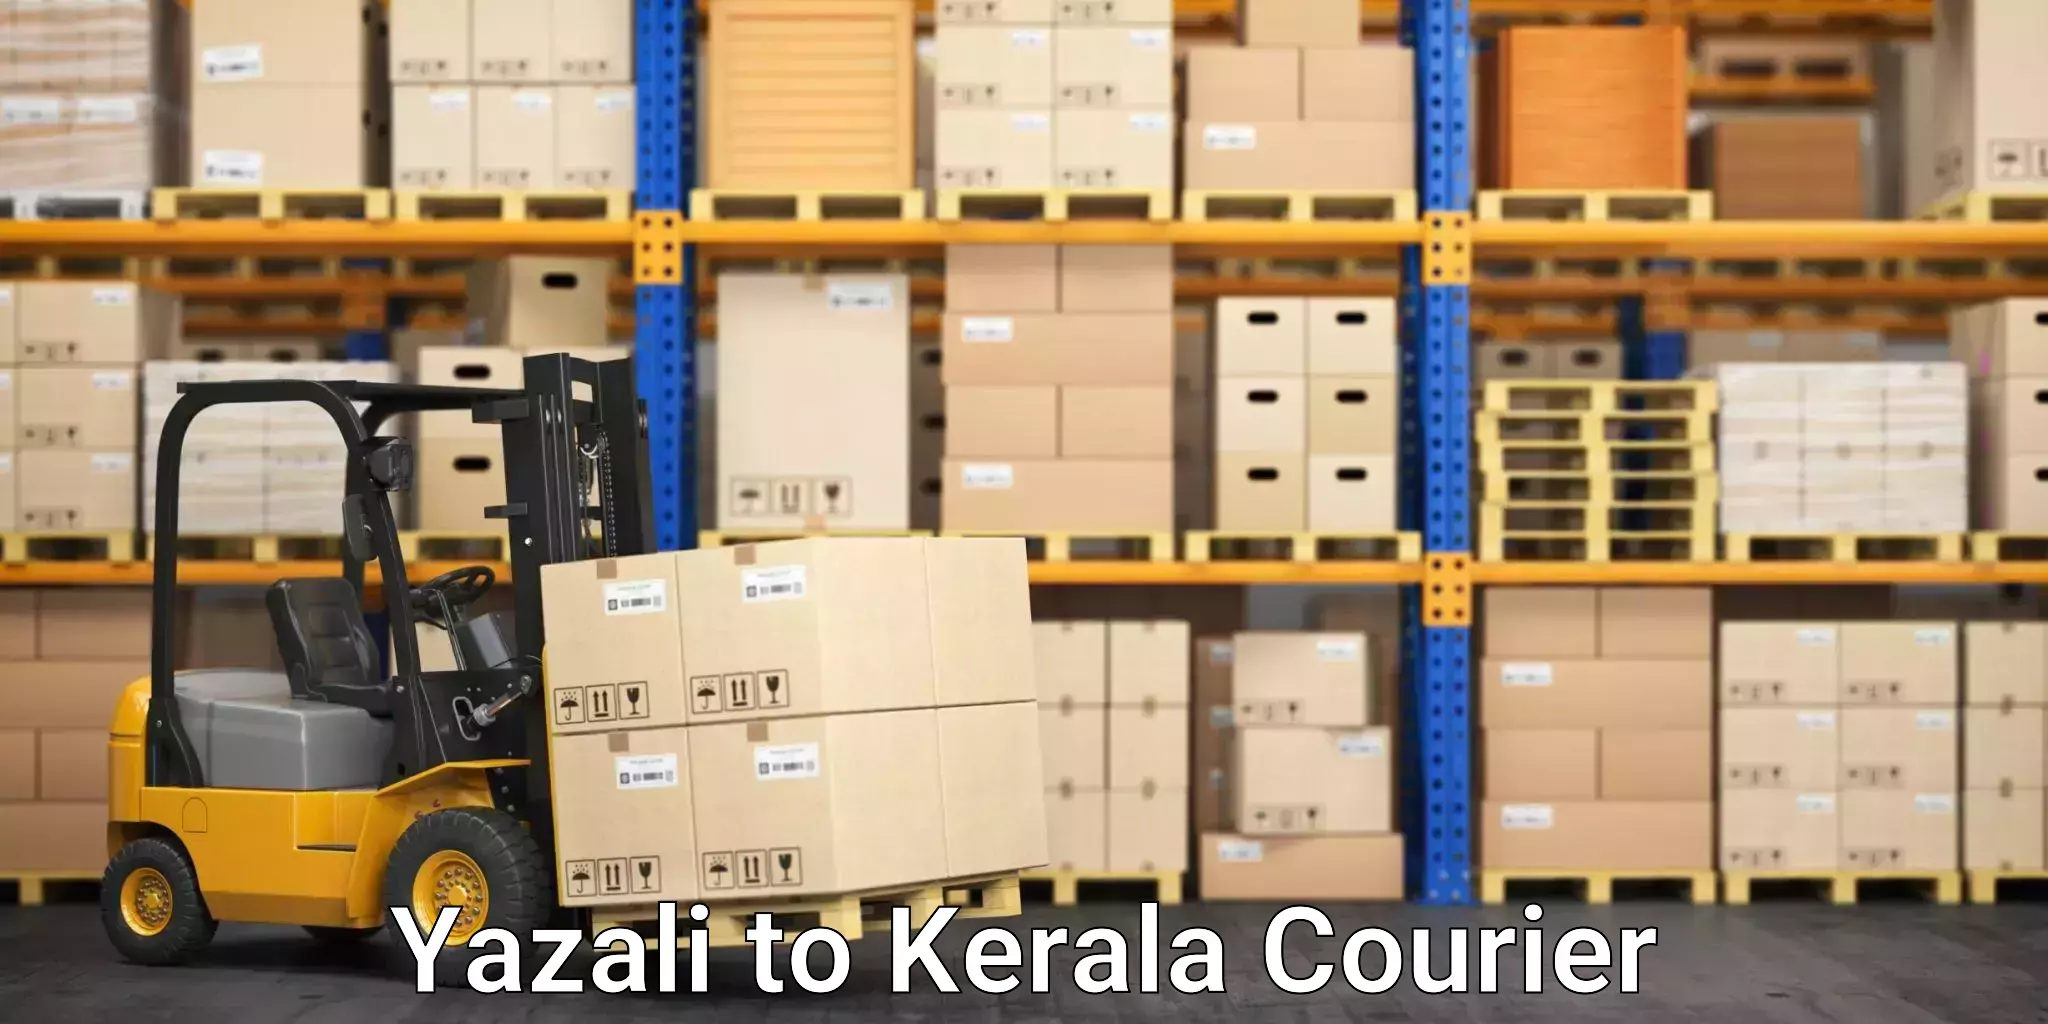 Reliable logistics providers Yazali to Kochi